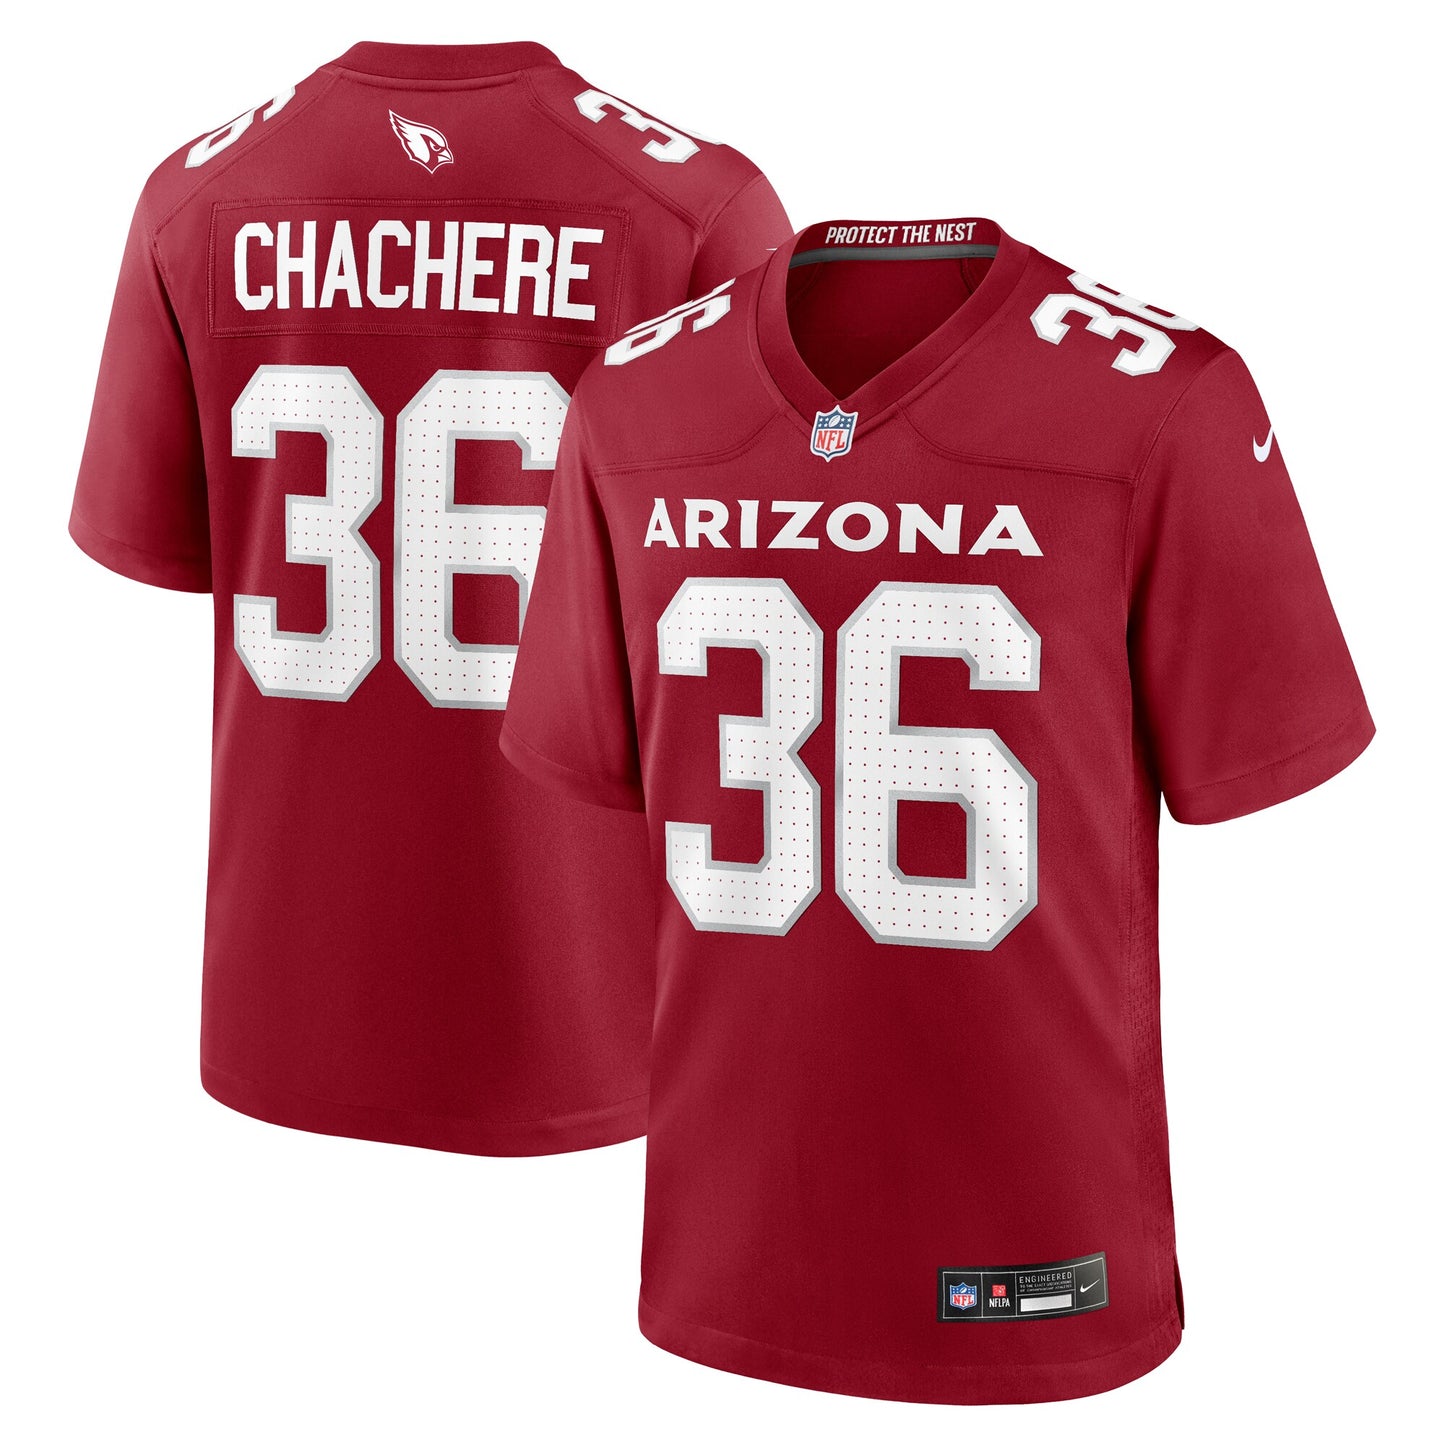 Andre Chachere Arizona Cardinals Nike Team Game Jersey - Cardinal